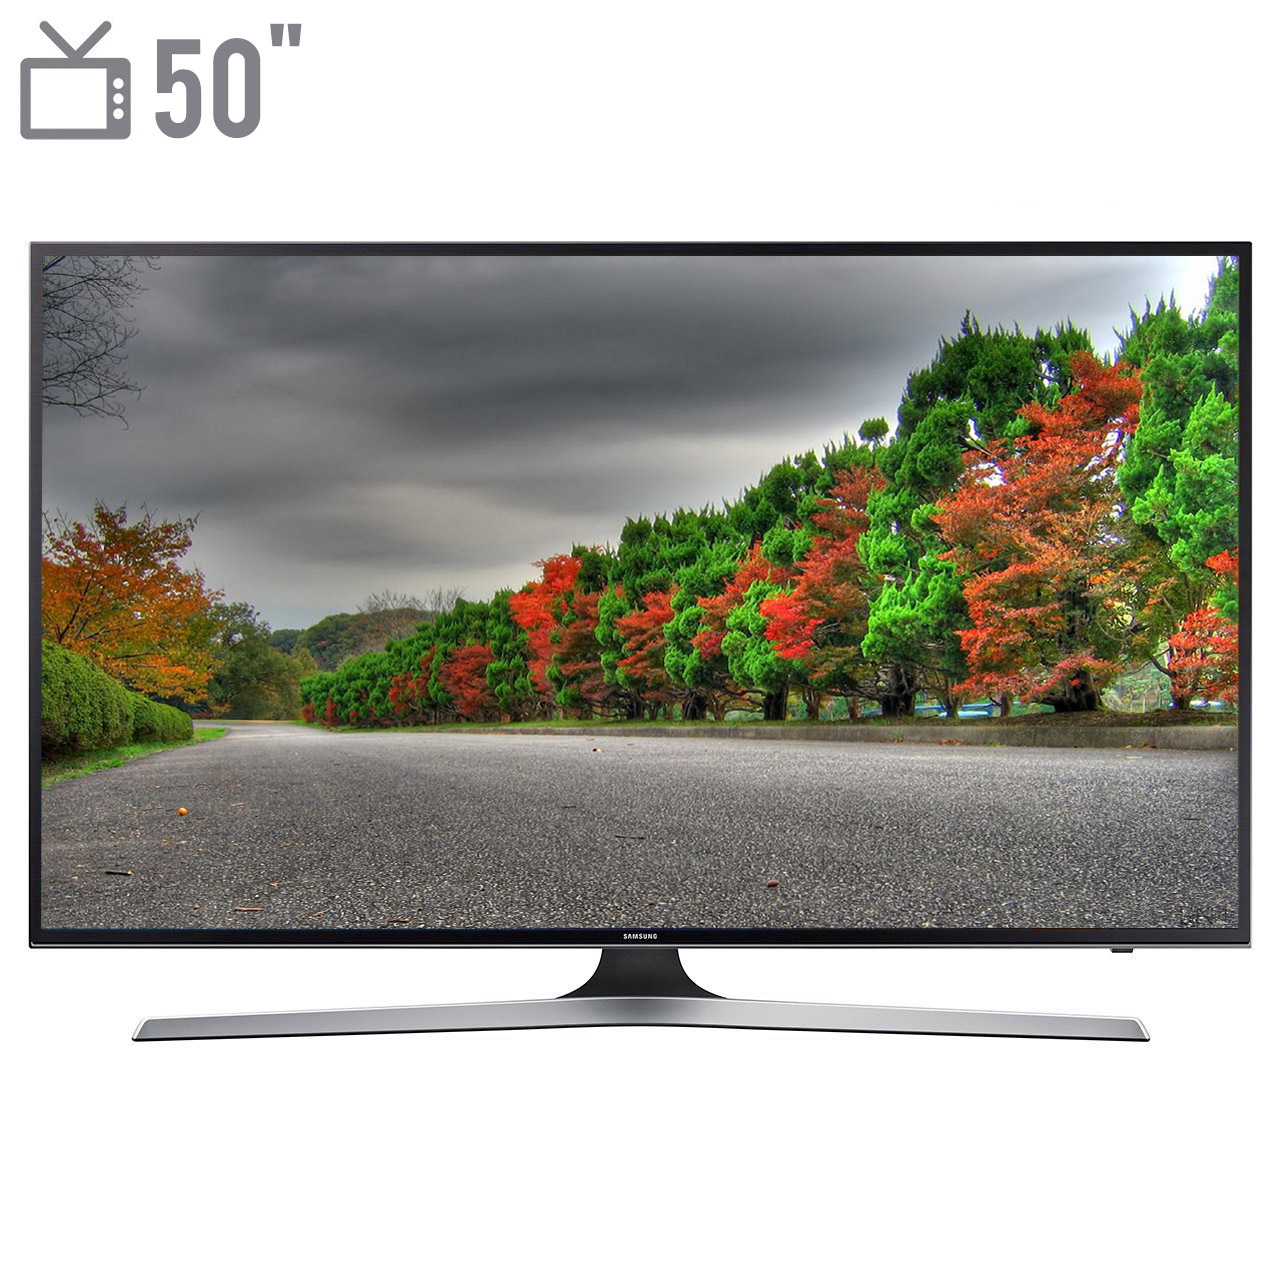 فروش اقساطی تلویزیون ال ای دی هوشمند سامسونگ مدل 50NU7900 سایز 50 اینچ